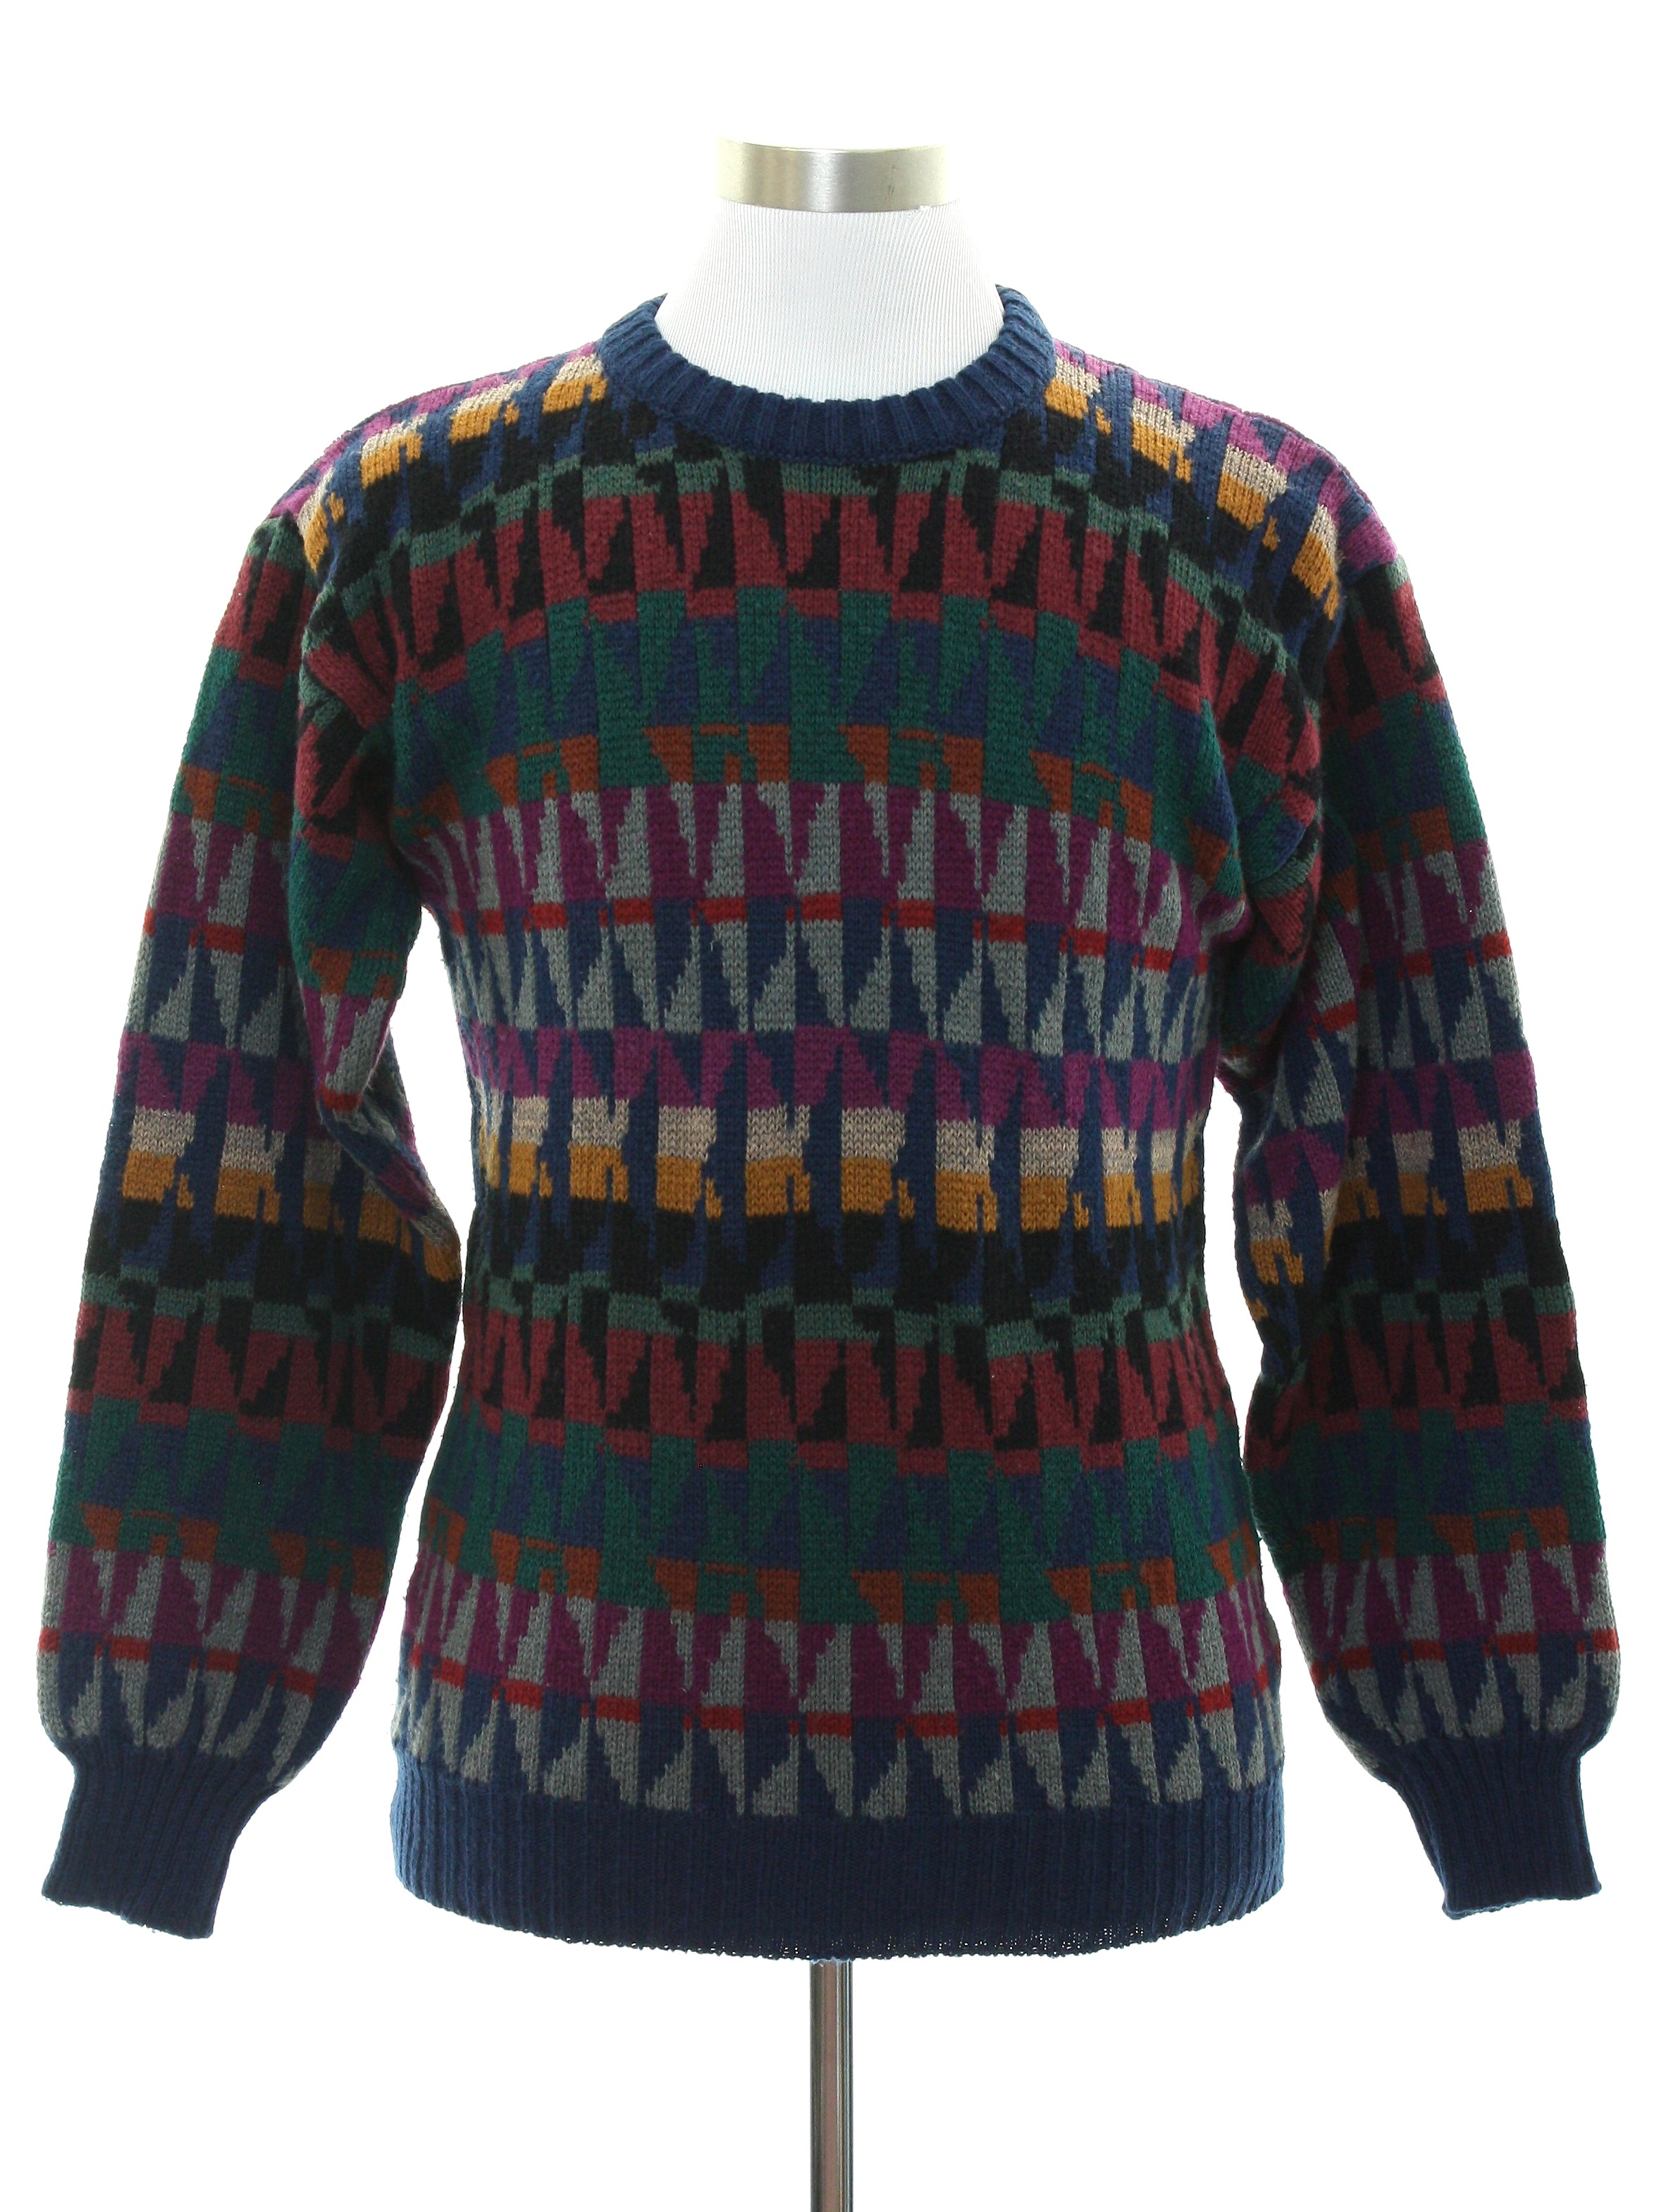 Retro 1980's Sweater (Sweaters Machine Knit) : 80s -Sweaters Machine ...